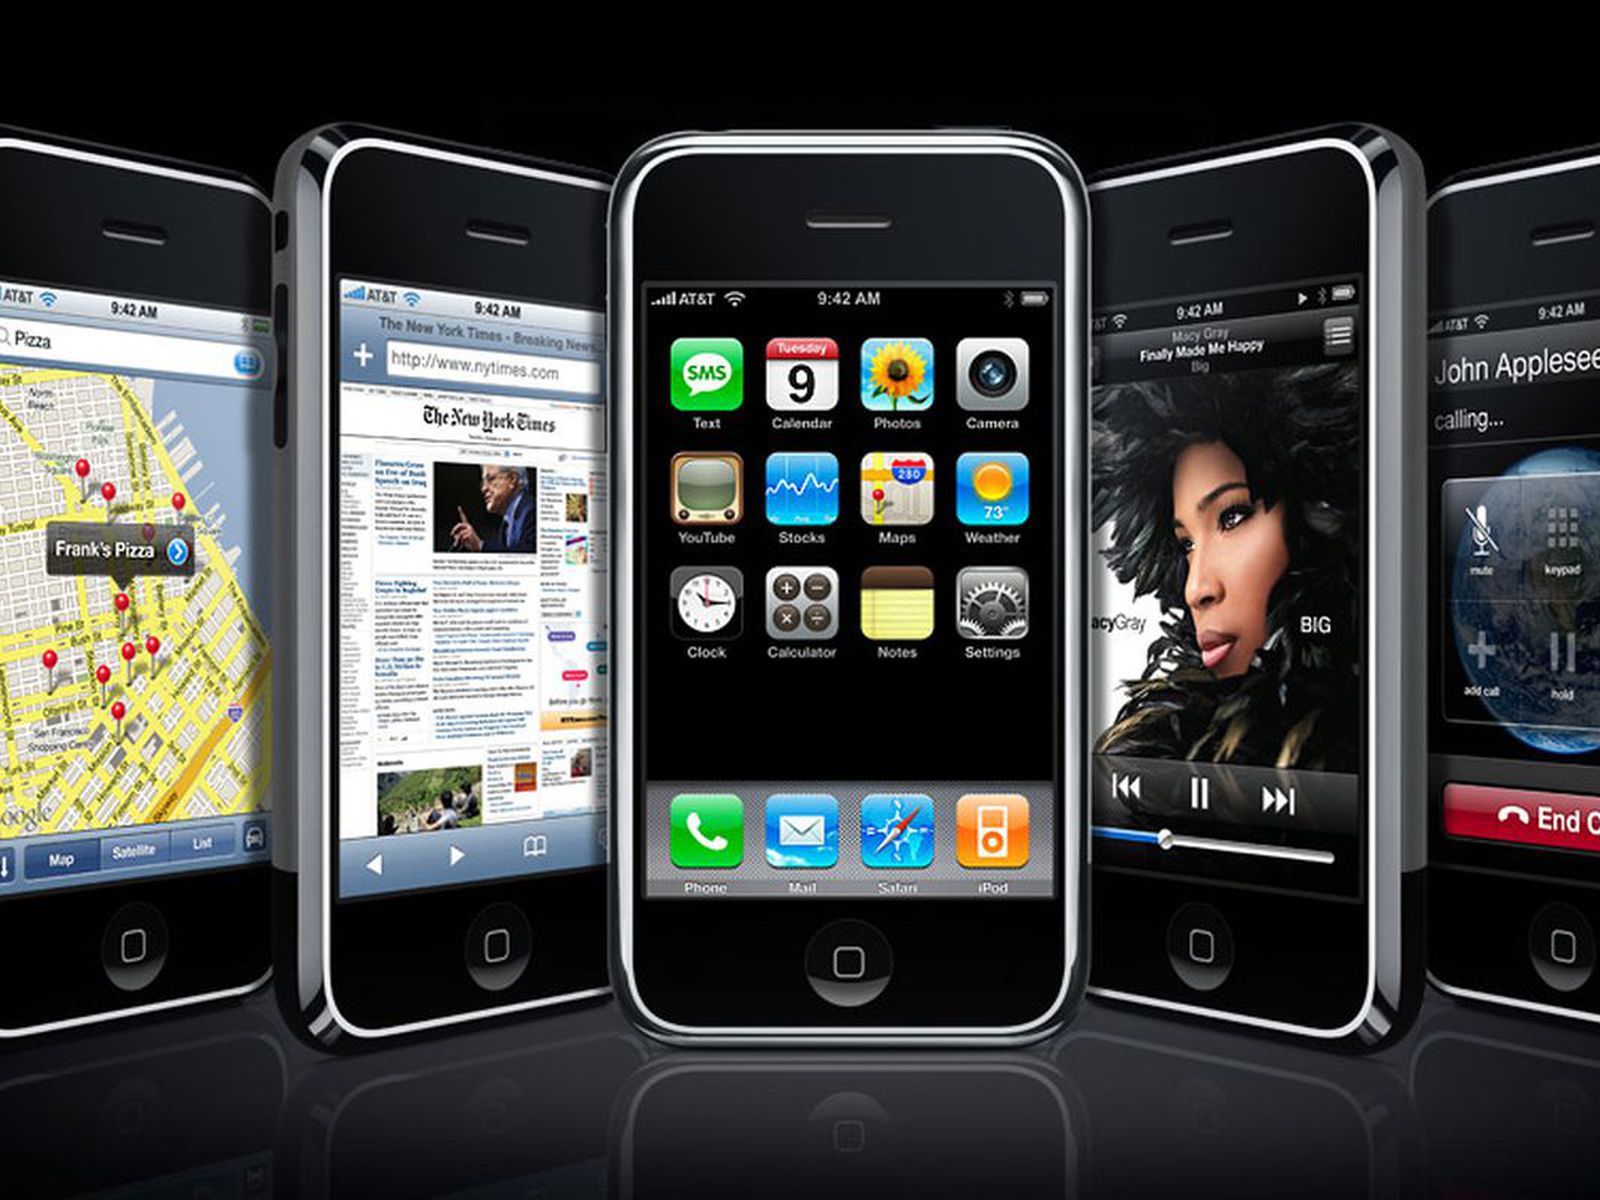 Precies Kaarsen Vijfde 16 Years Ago Today, Steve Jobs Introduced the iPhone - MacRumors